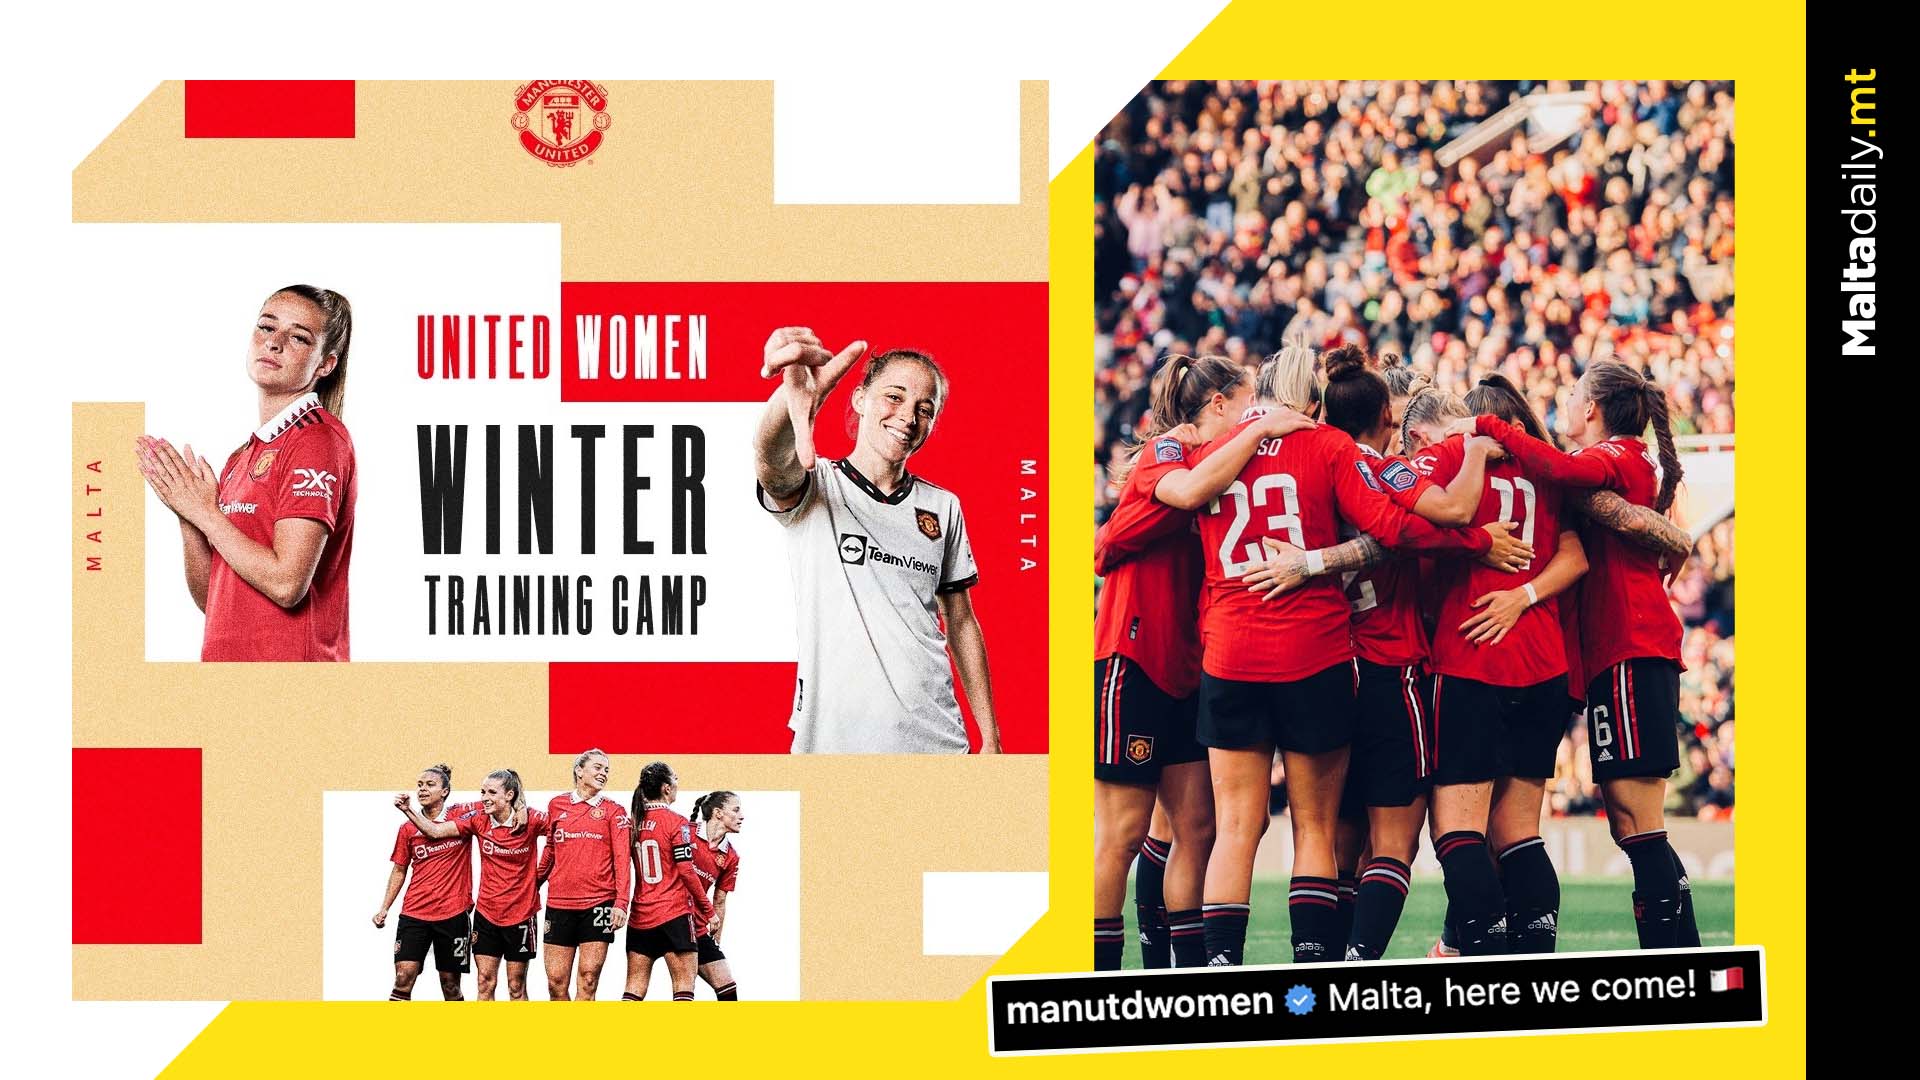 Manchester United Women’s team arrives in Malta